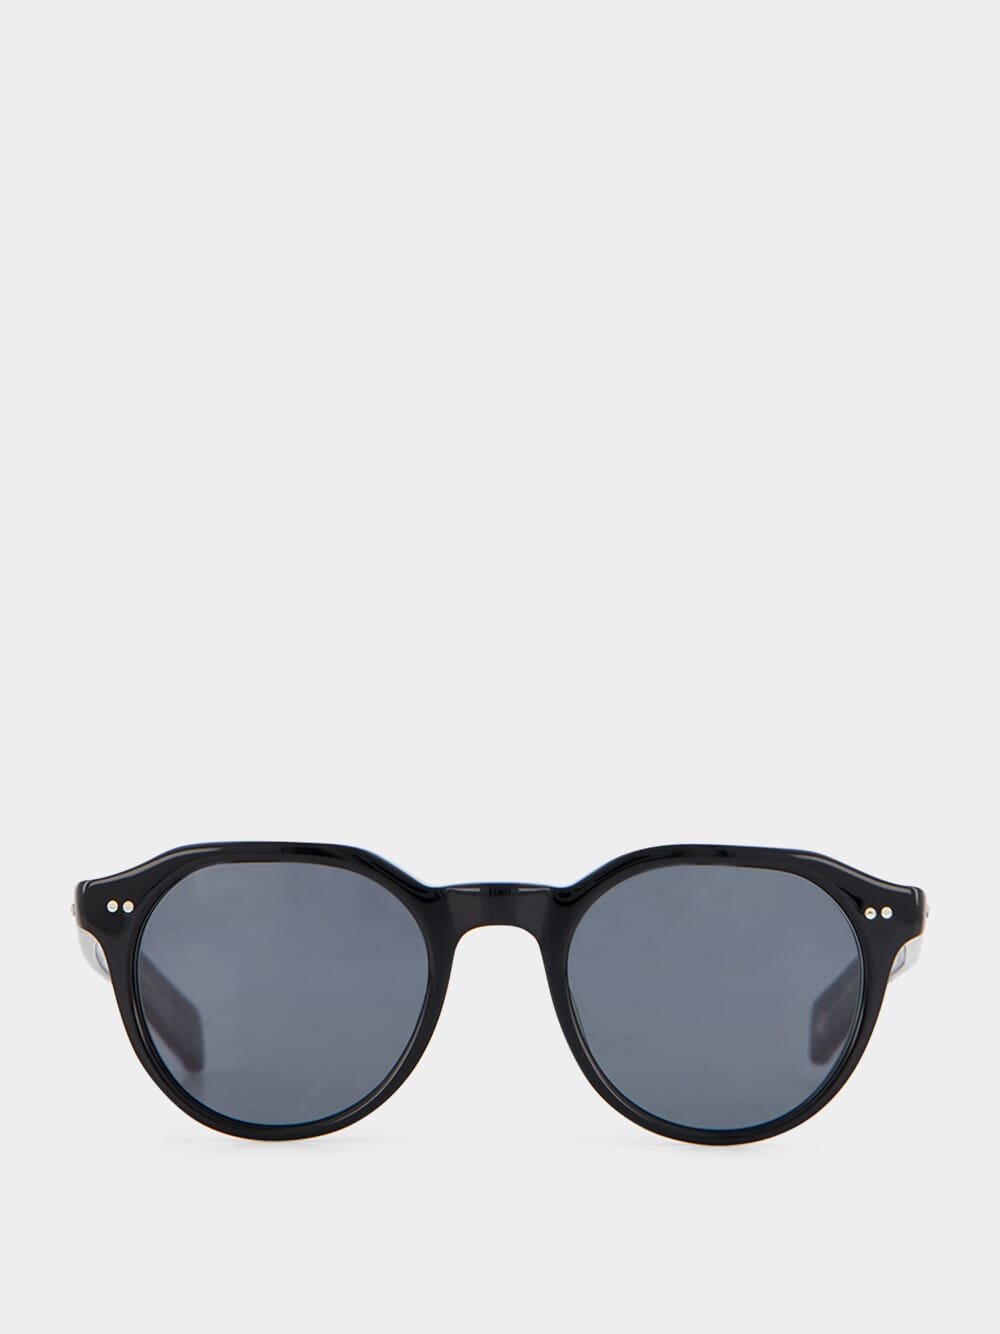 Eyevan Lubin Black Sunglasses | Fashion Clinic